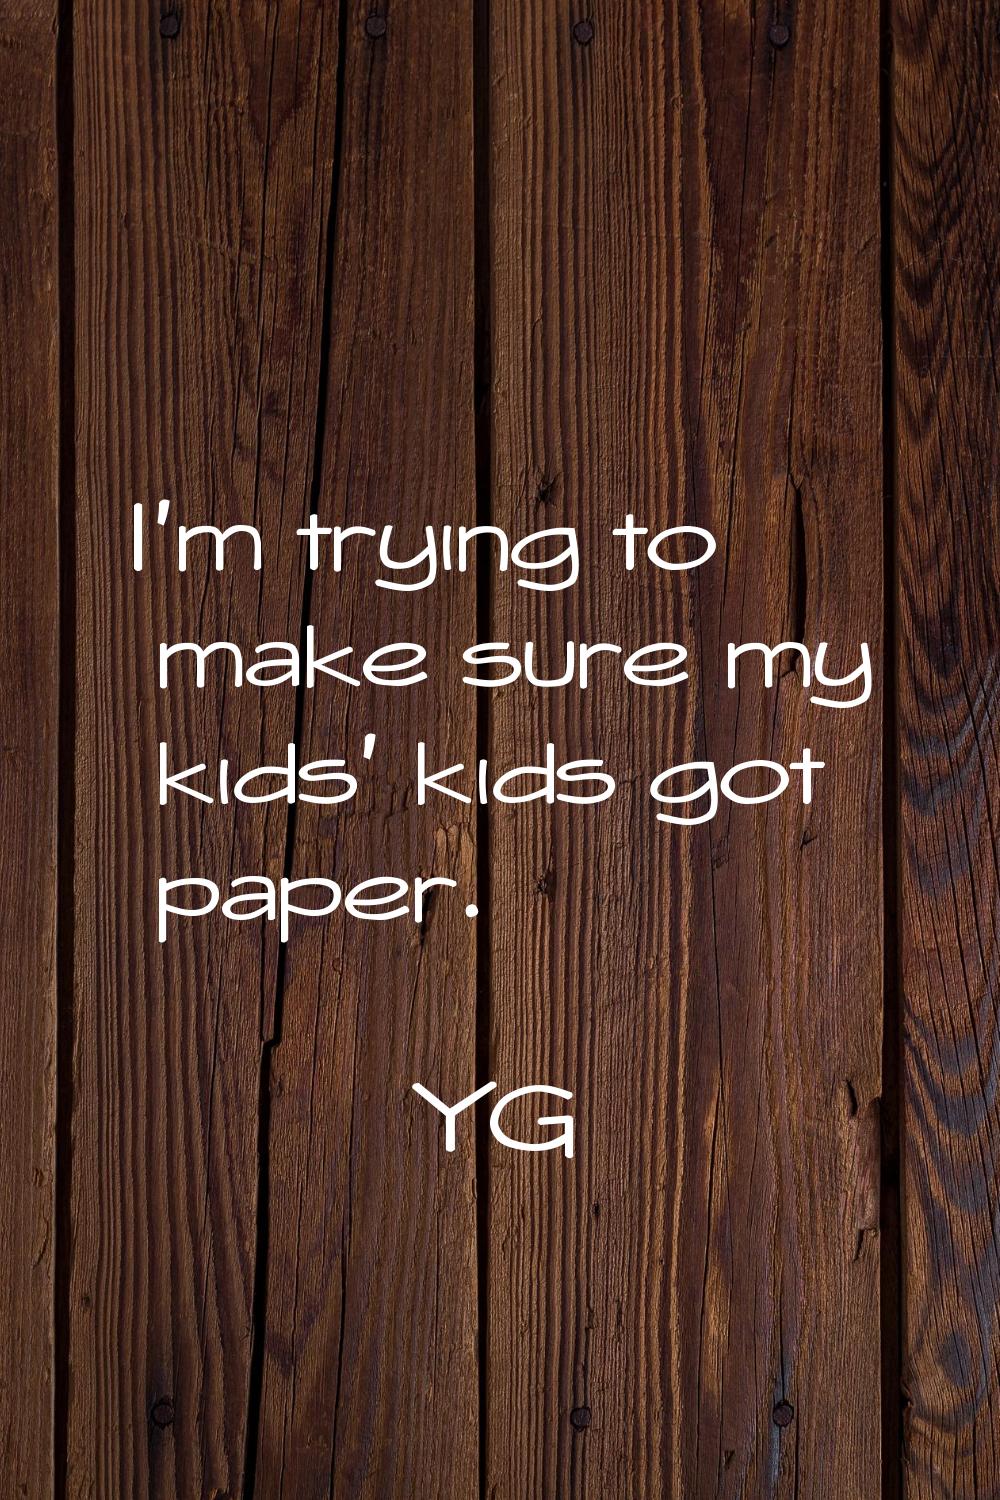 I'm trying to make sure my kids' kids got paper.